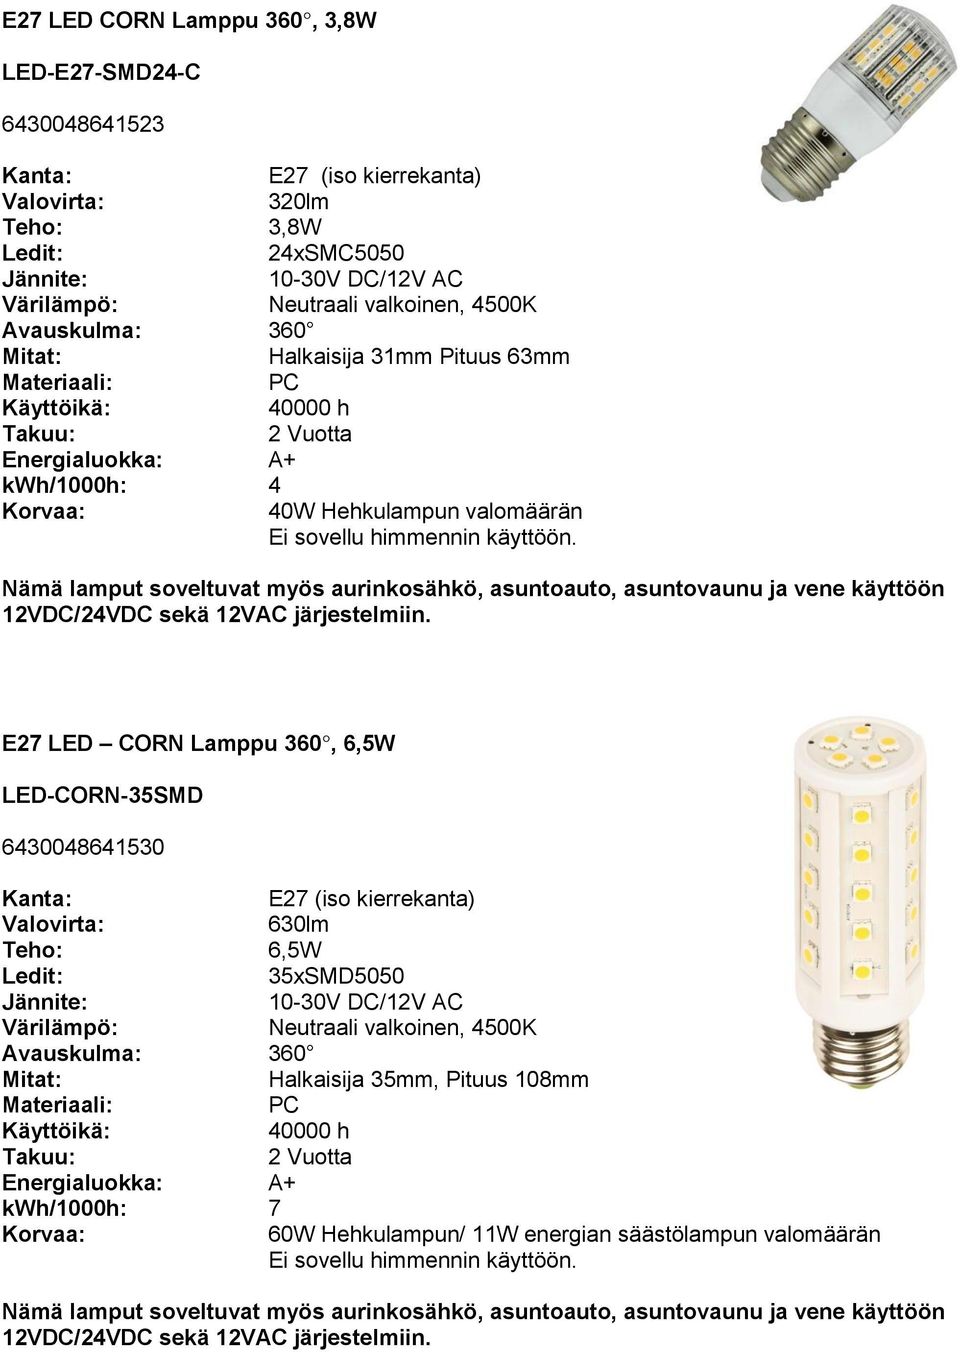 E27 LED CORN Lamppu 360, 6,5W LED-CORN-35SMD 6430048641530 E27 (iso kierrekanta) 630lm Teho: 6,5W 35xSMD5050 Neutraali valkoinen, 4500K Avauskulma: 360 Halkaisija 35mm, Pituus 108mm